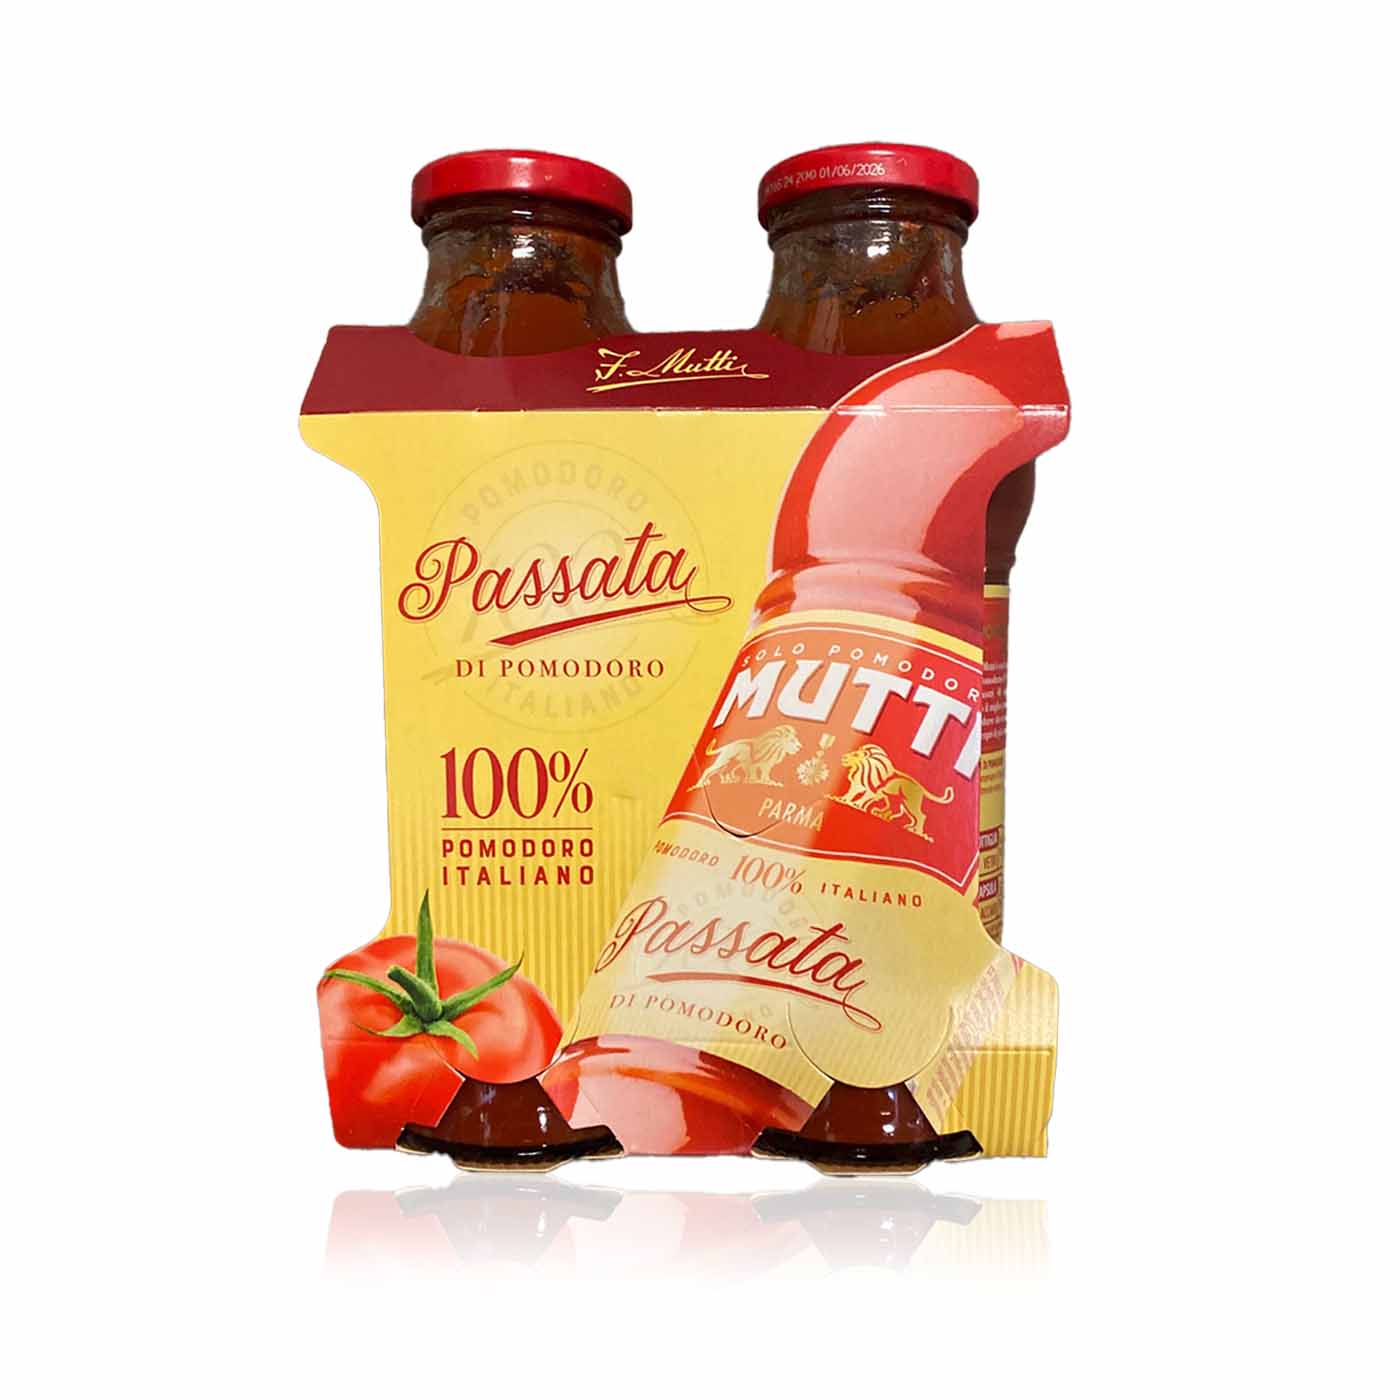 MUTTI - Passata Di Pomodoro - Tomatensauce - 2x0,4kg - italienisch - einkaufen.de